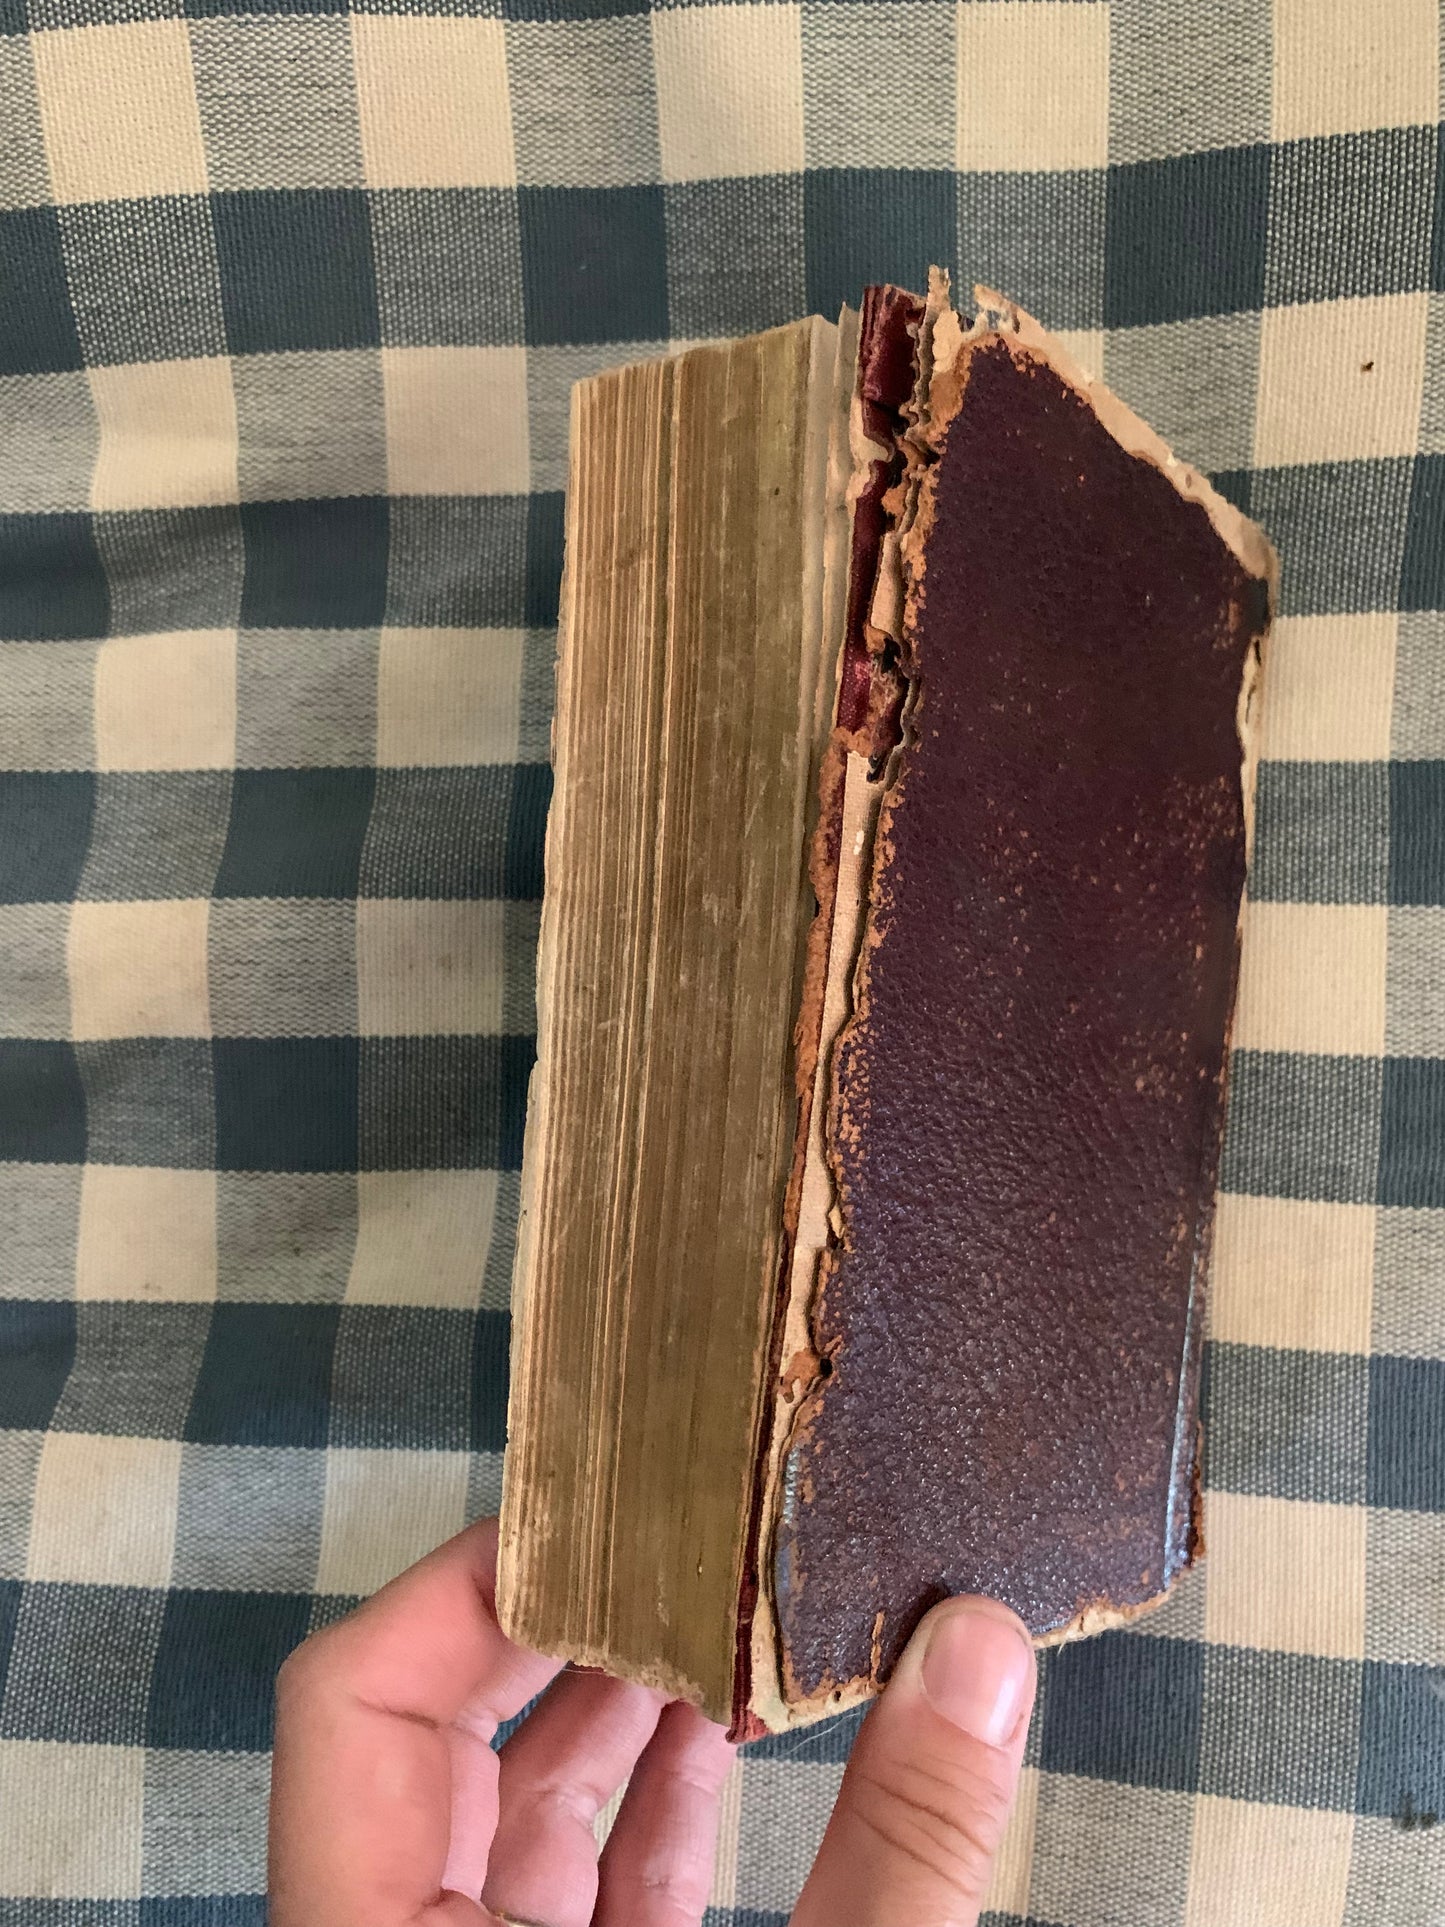 Antique Mechanics & Engineers pocket book